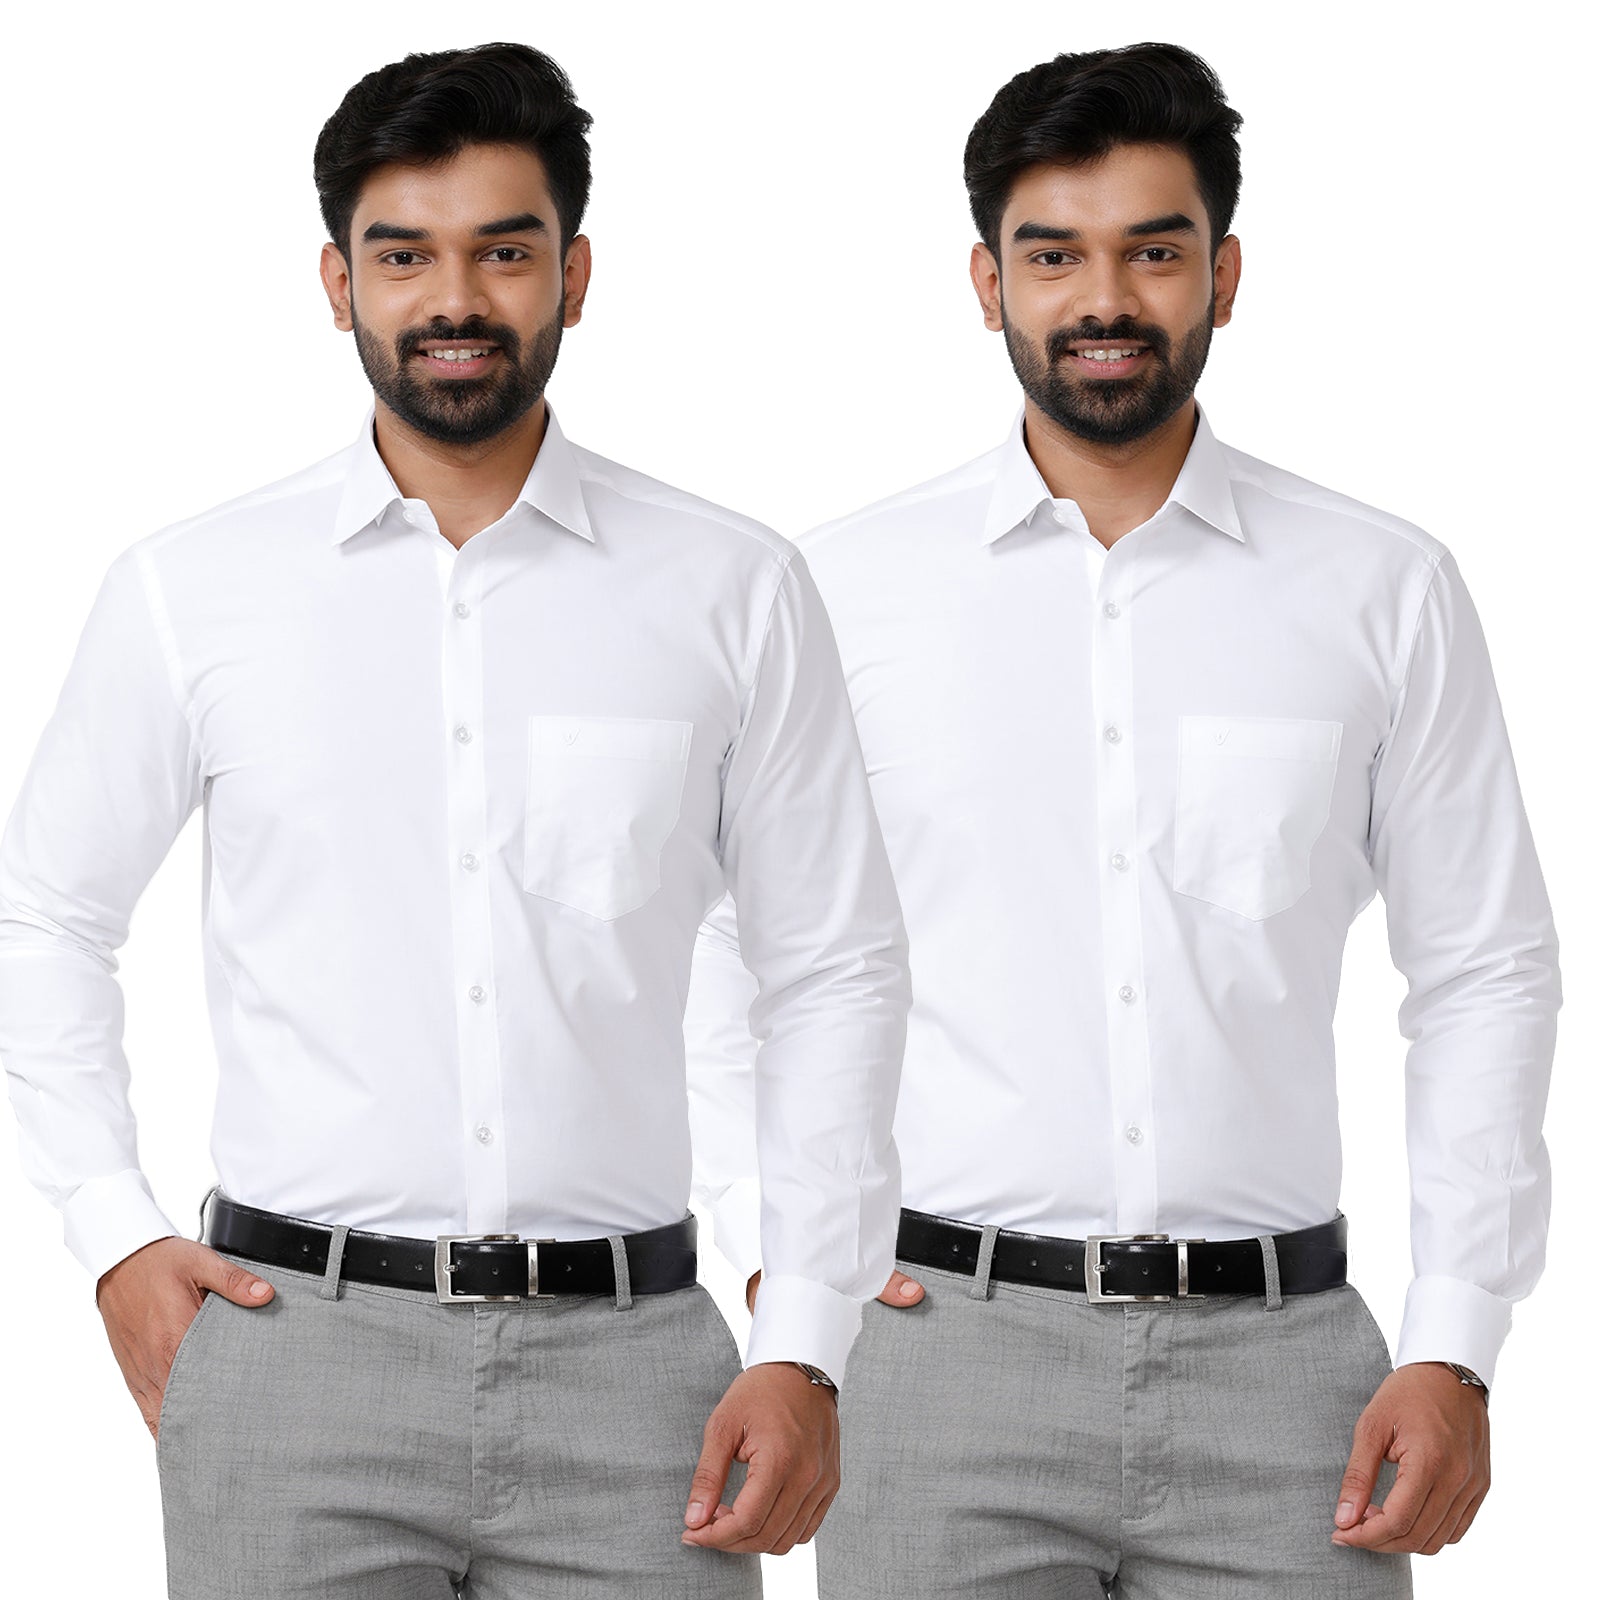 White Shirt Matching Pant || White Shirt Combination Pants Ideas - YouTube